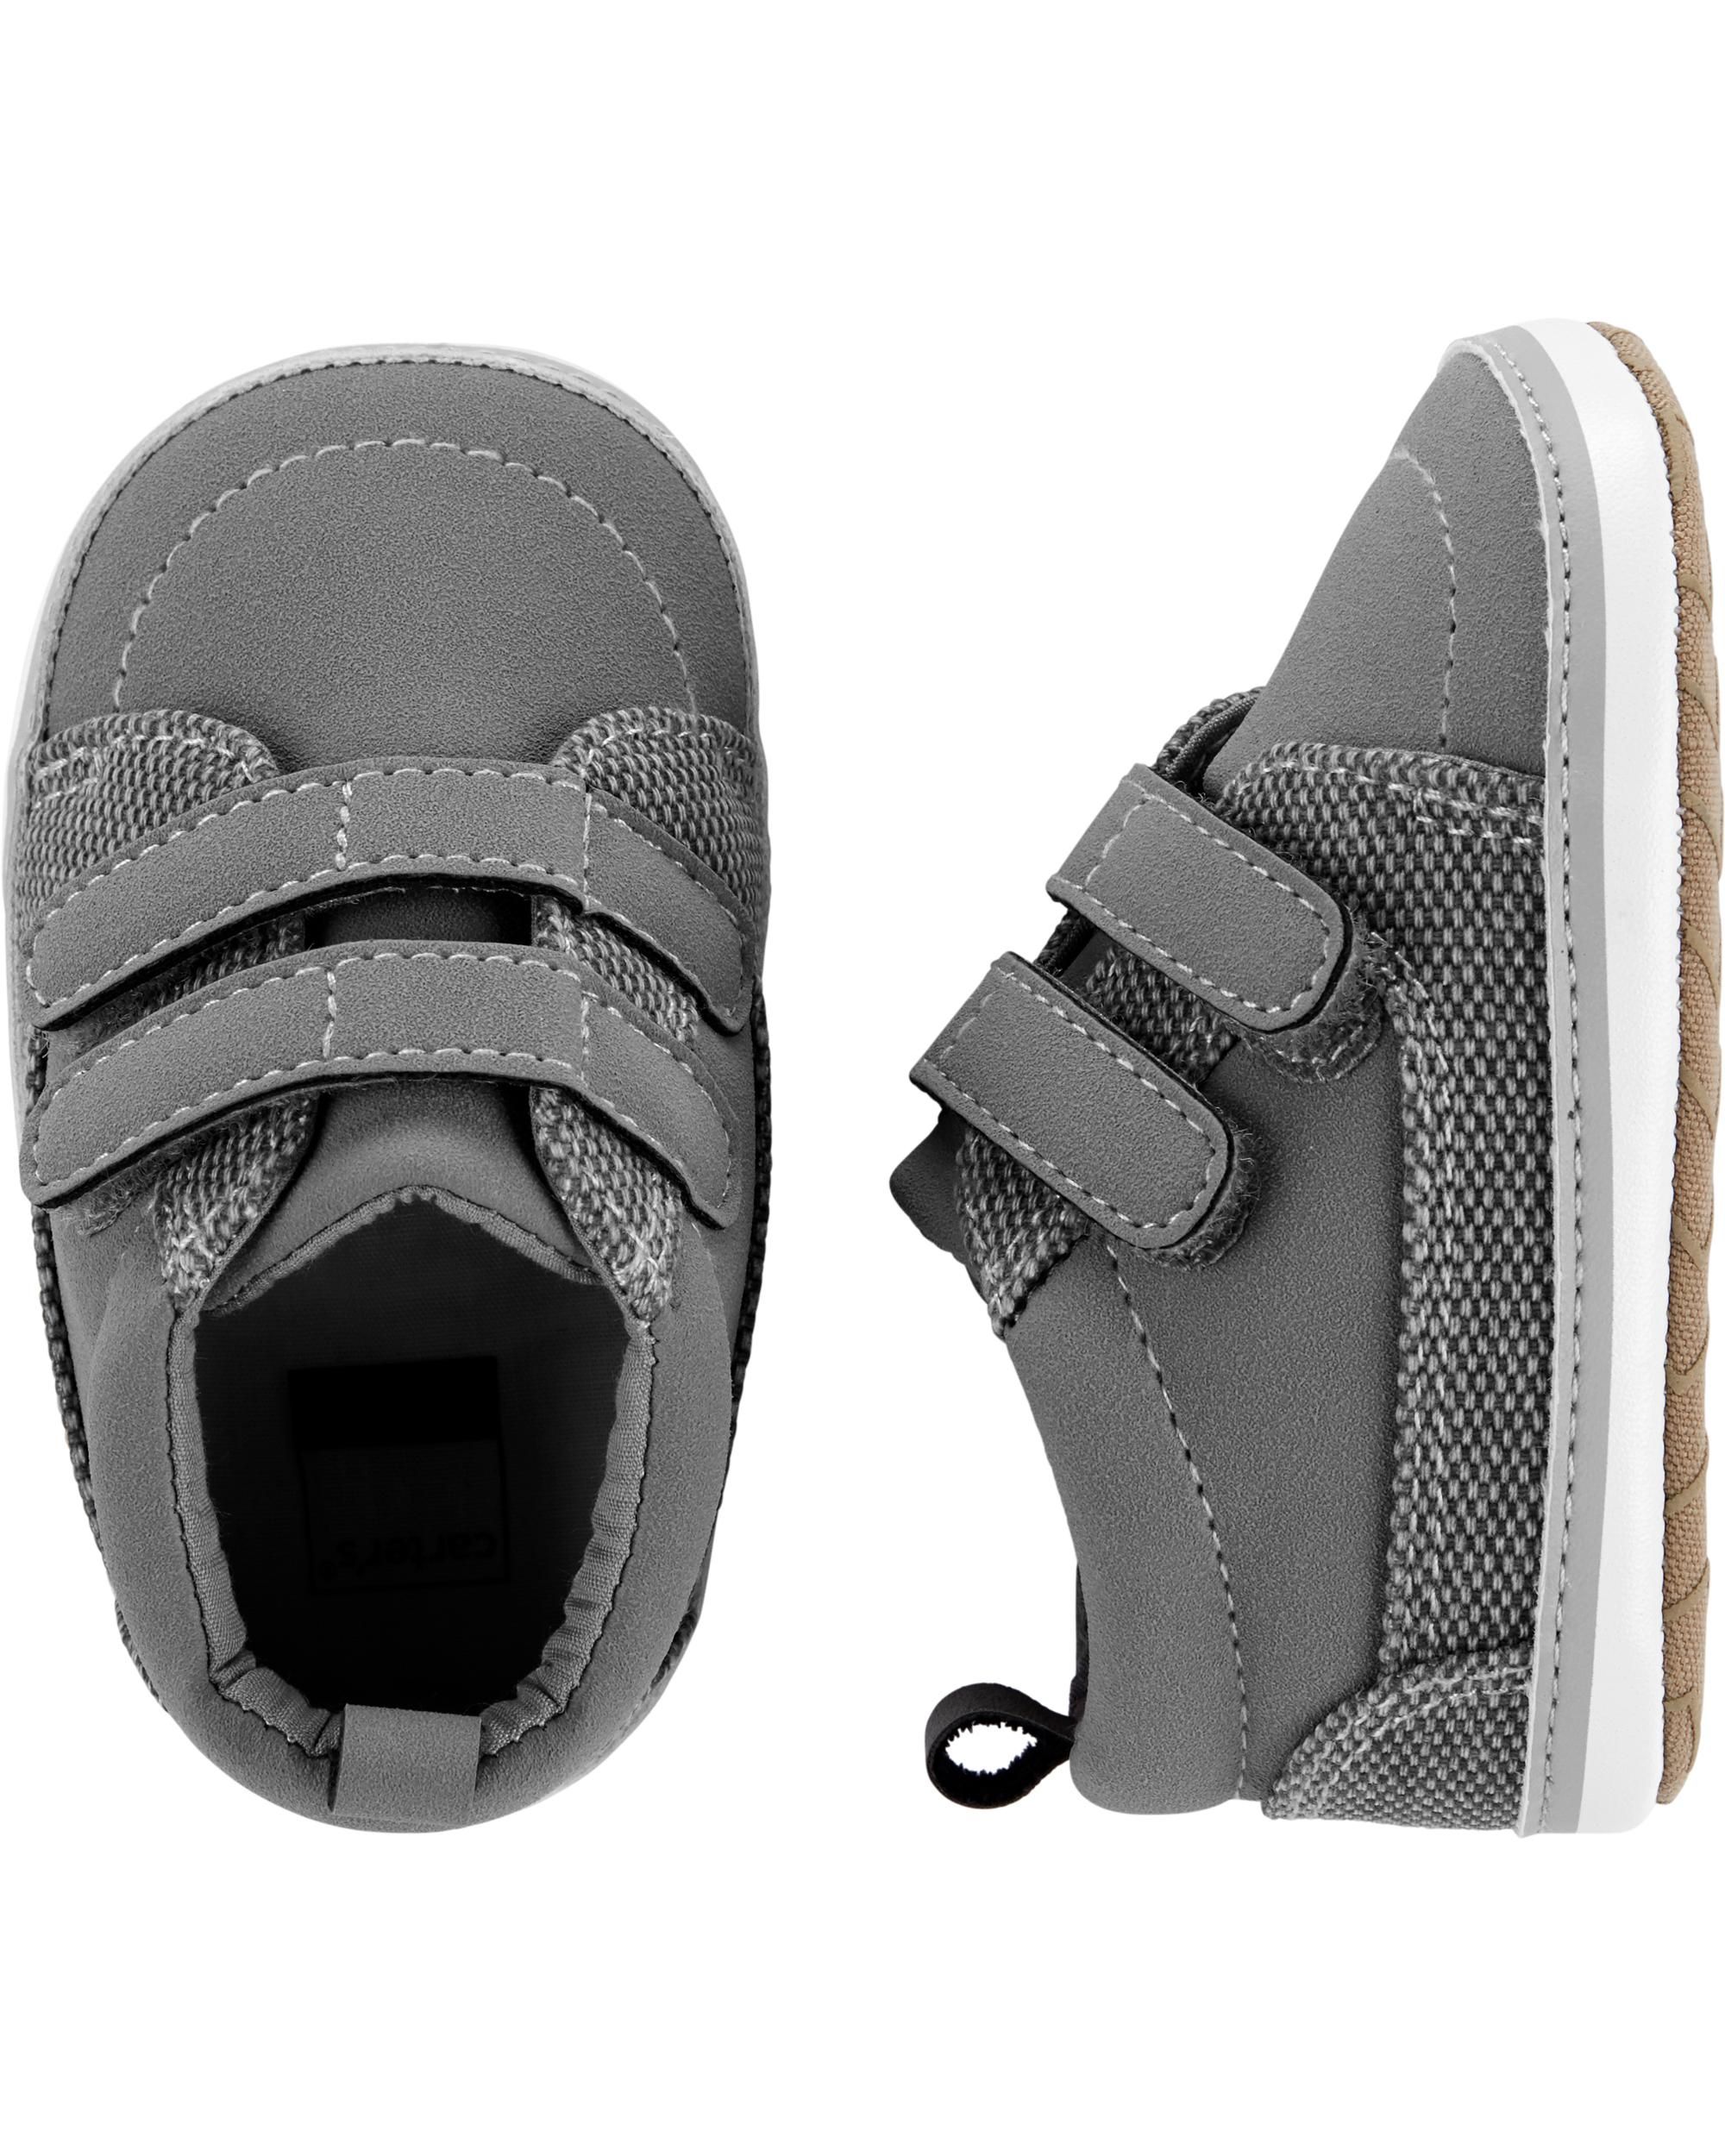 Carter's Sneaker Baby Shoes | Carter's